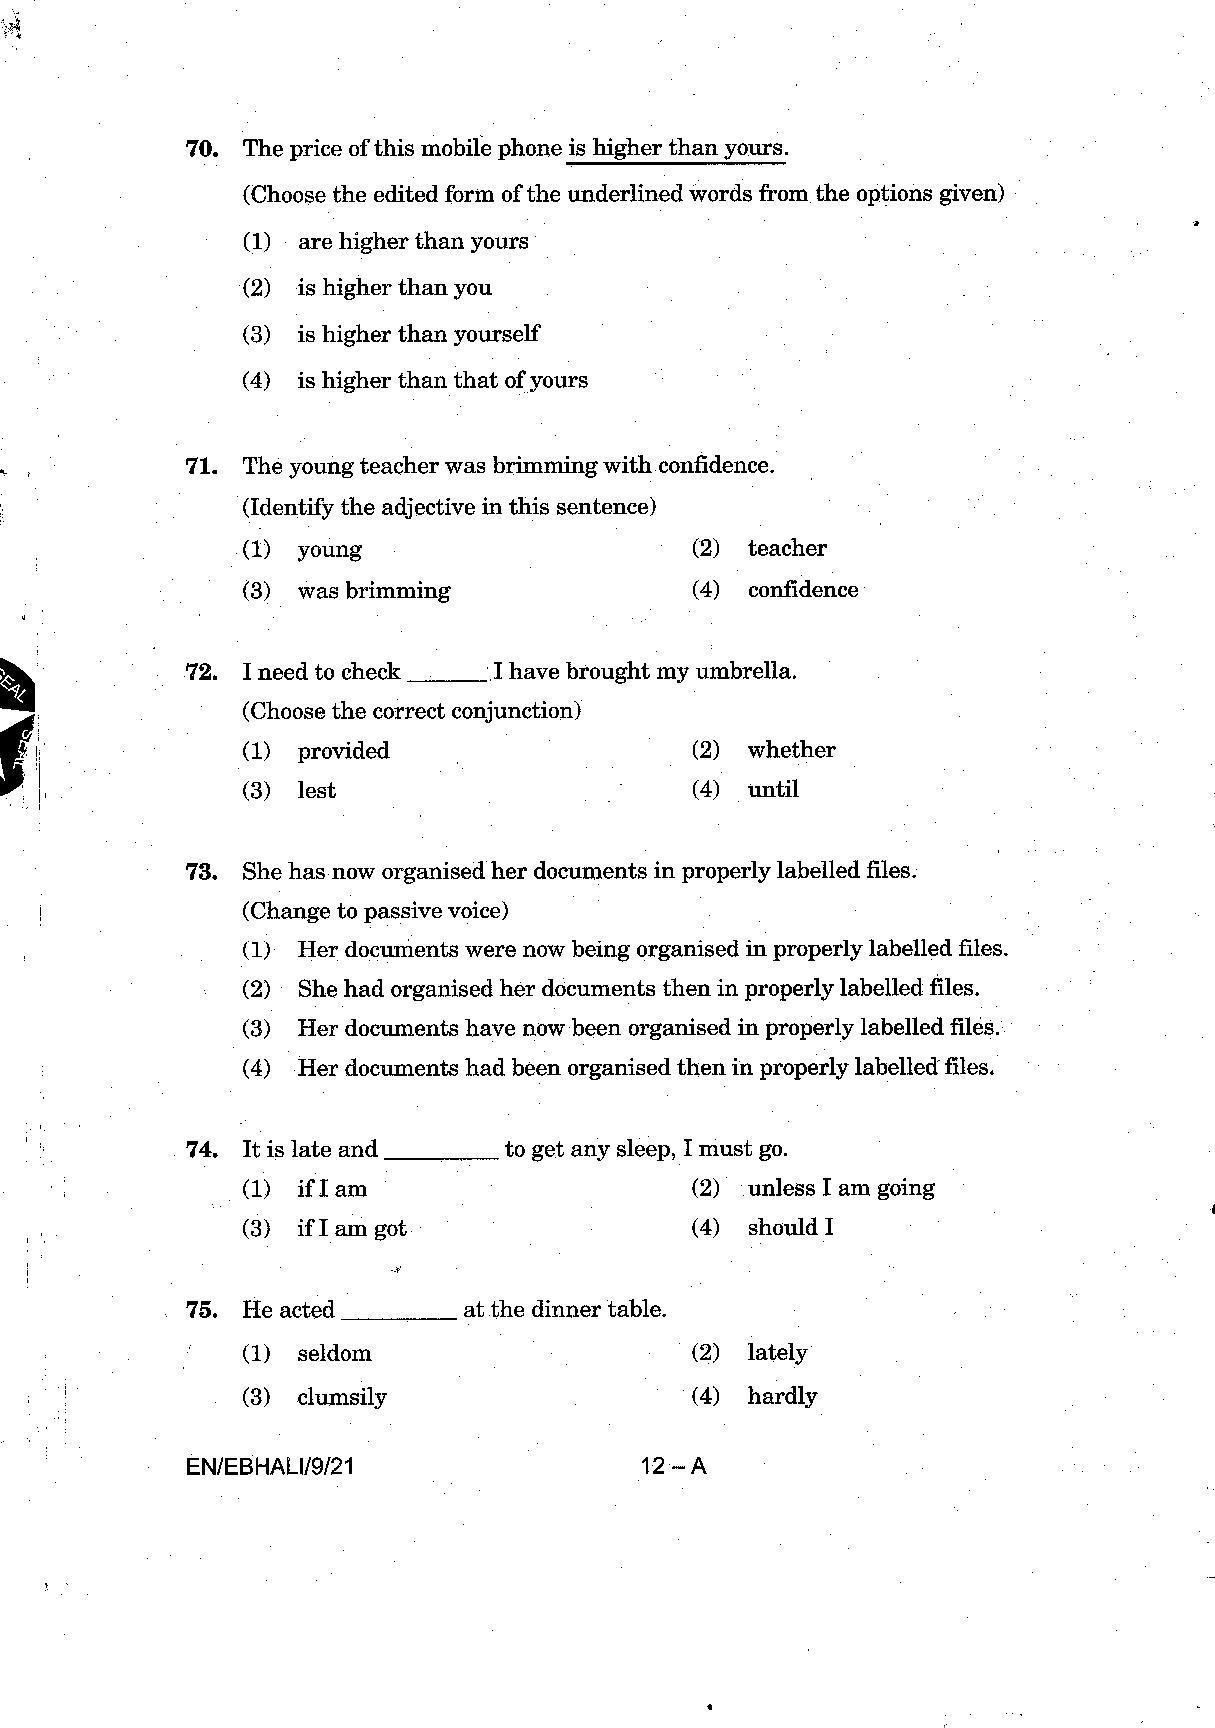 Sainik School Class 9 Question Paper 2021 in English - Page 12